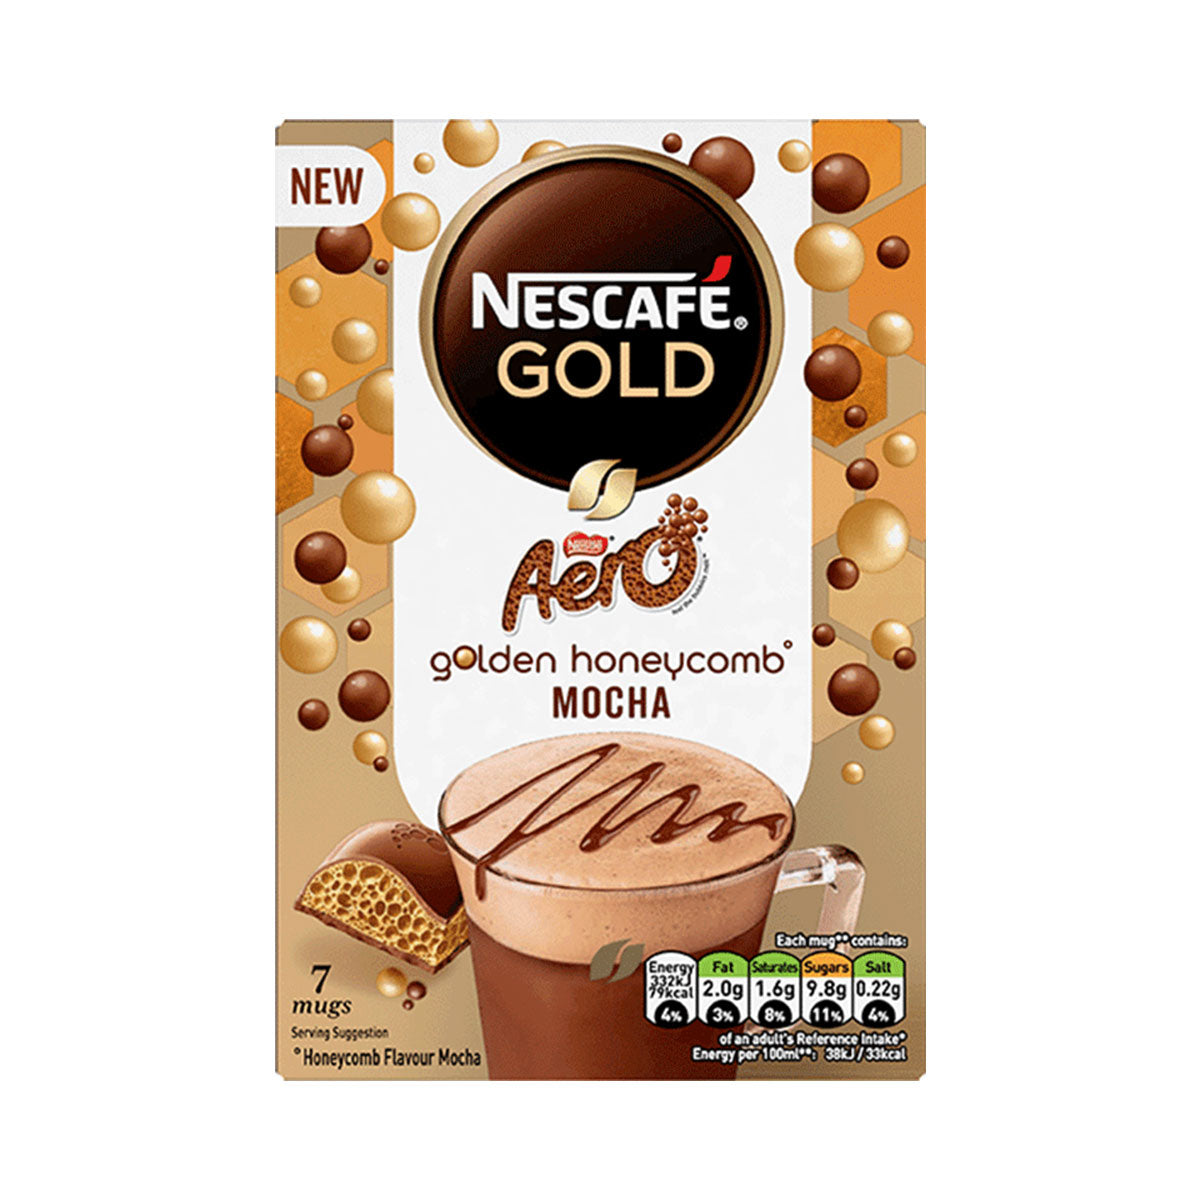 Nescafe Gold Aero Honeycomb Mocha 7x19gr